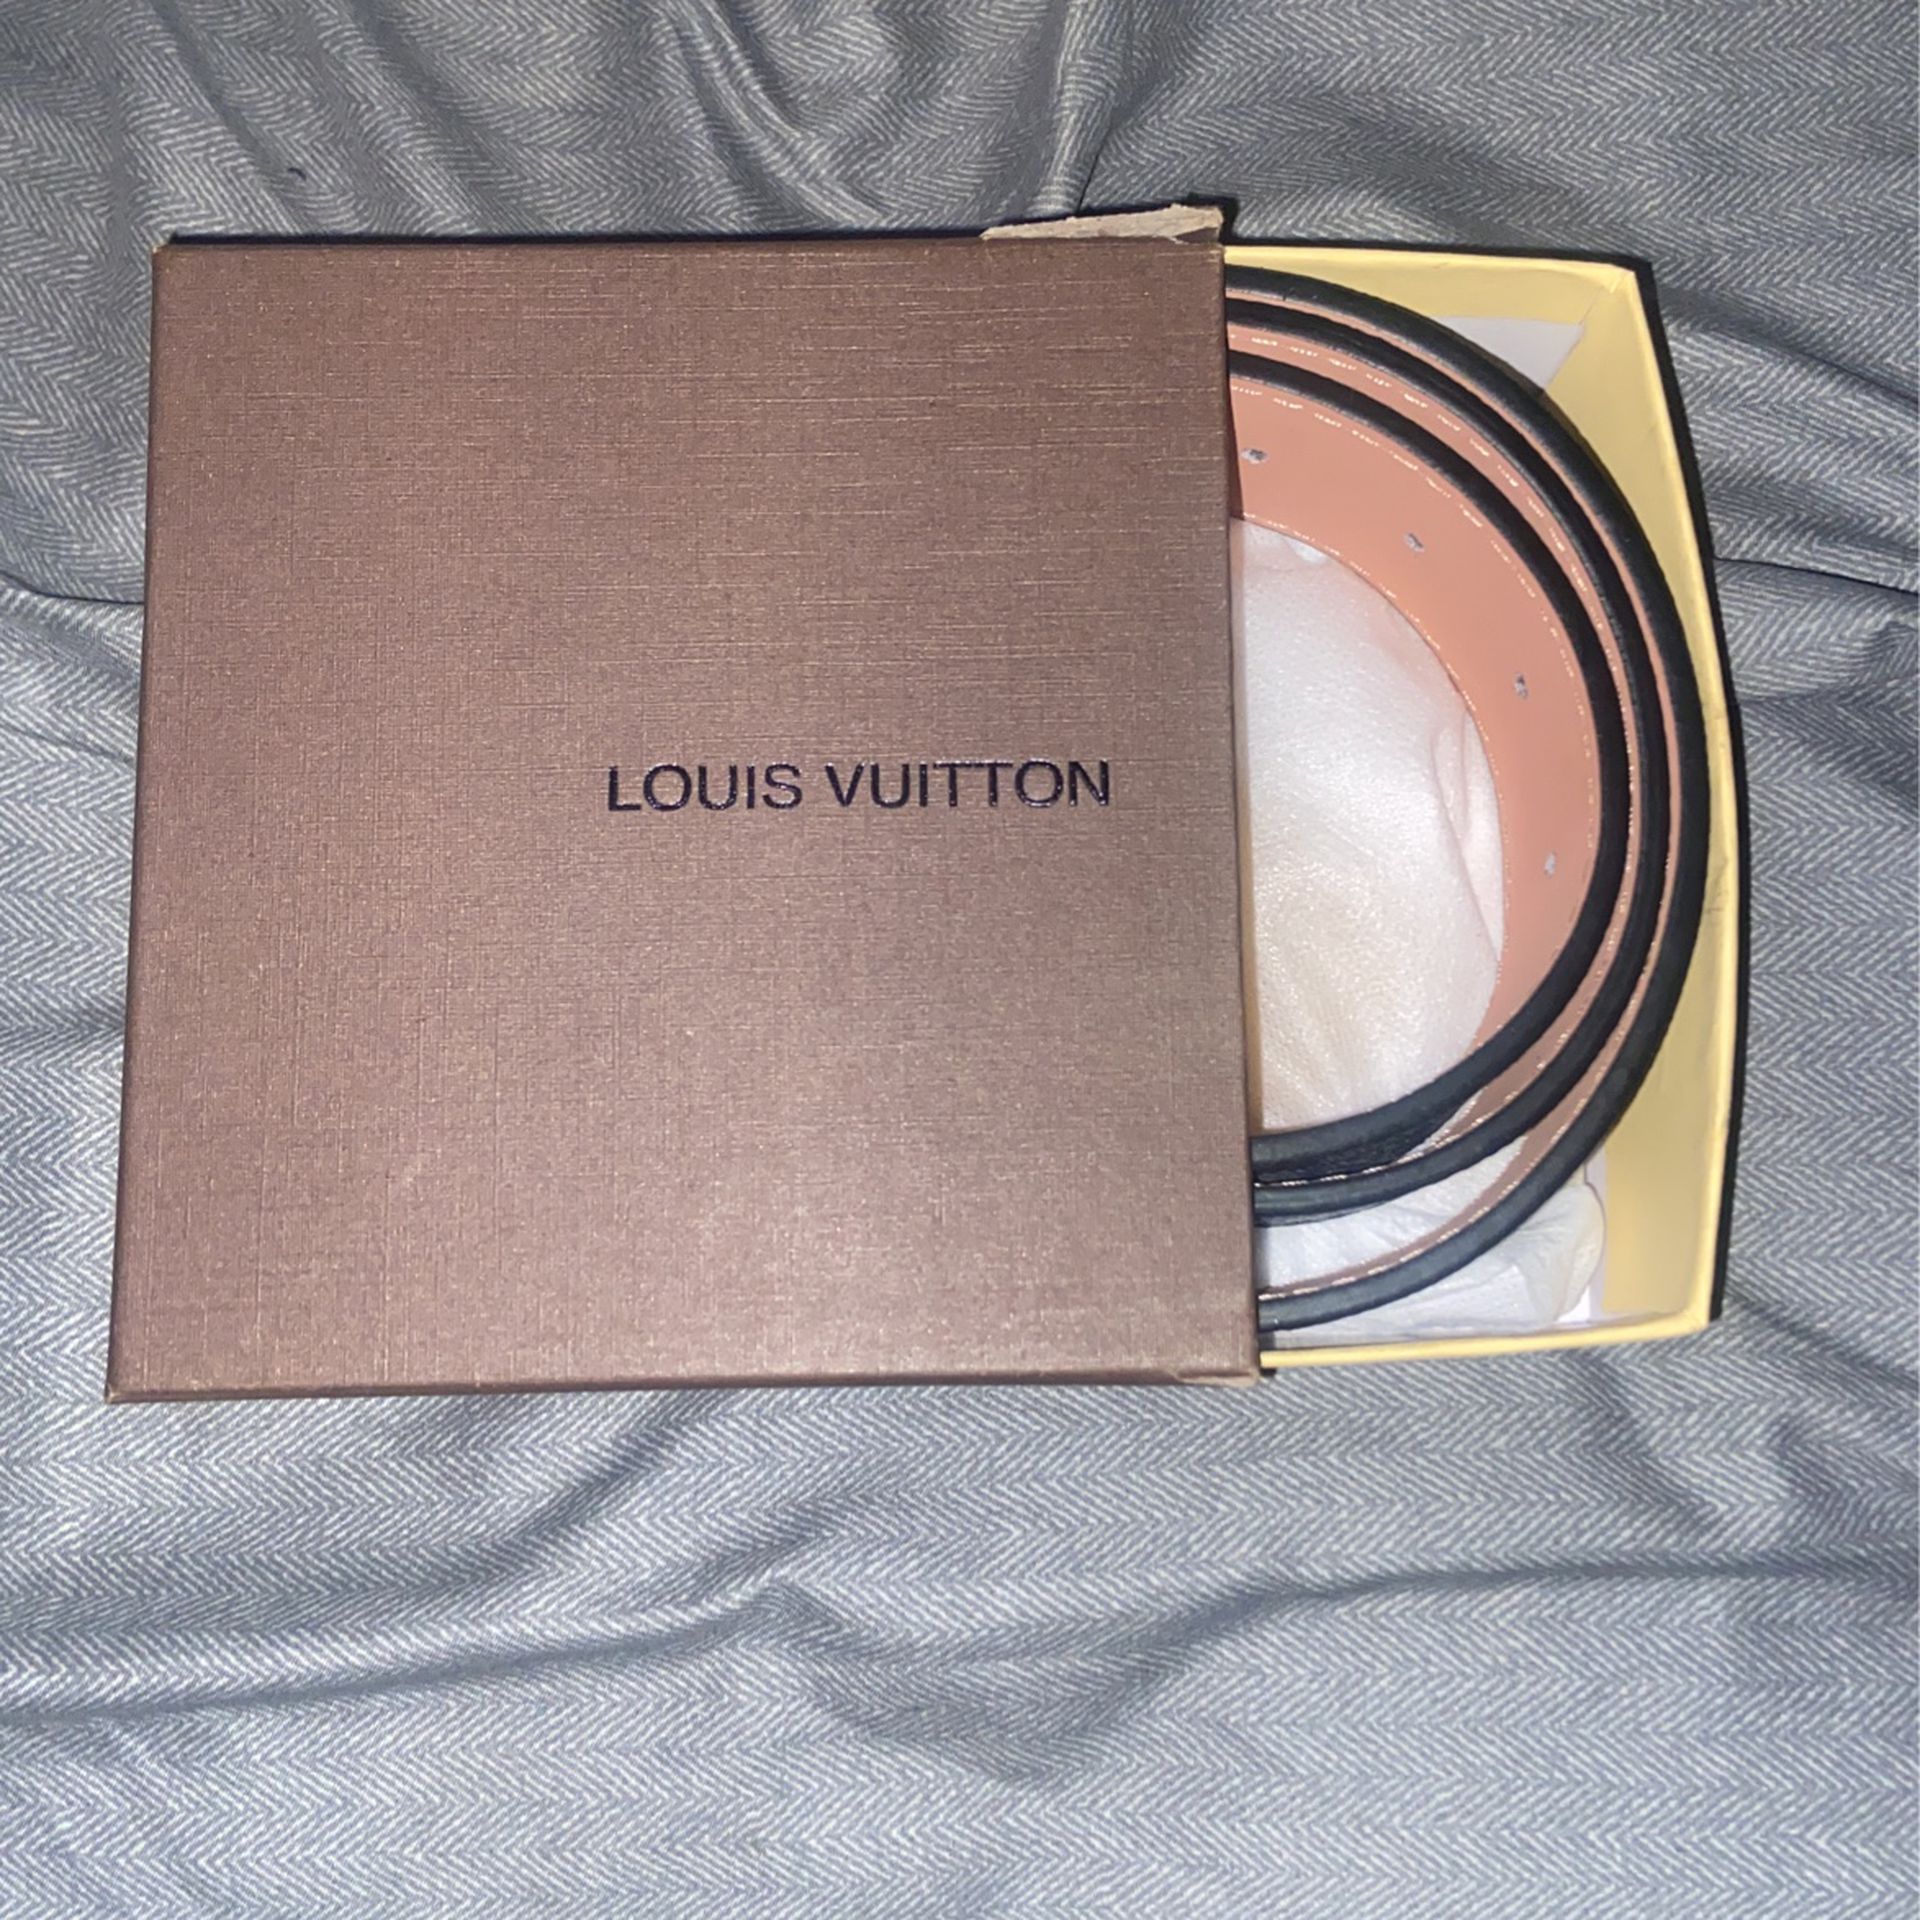 Louis Vuitton Belt for Sale in Brooklyn, NY - OfferUp